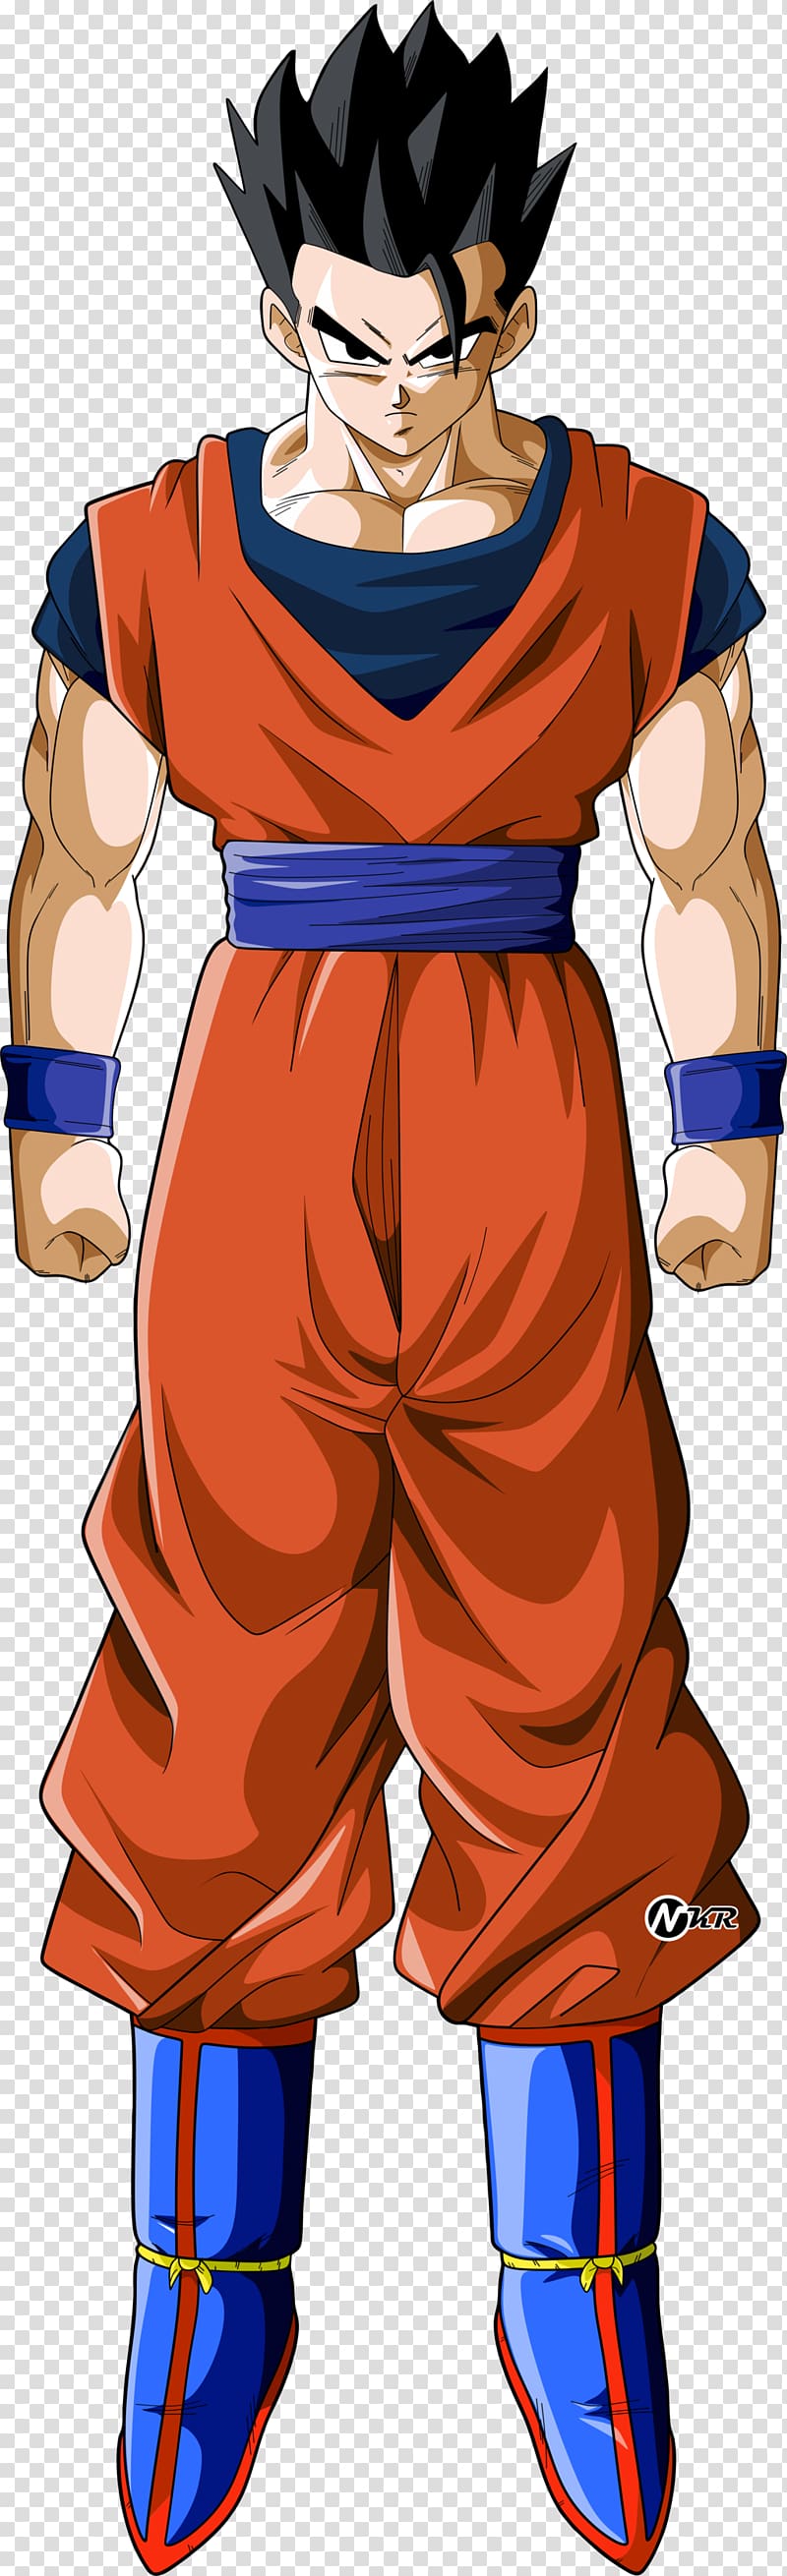 Goku Vegeta Gohan Frieza Dragon Ball, Dragon Ball Super , Super Saiyan Goku  and Vegeta illustration transparent background PNG clipart